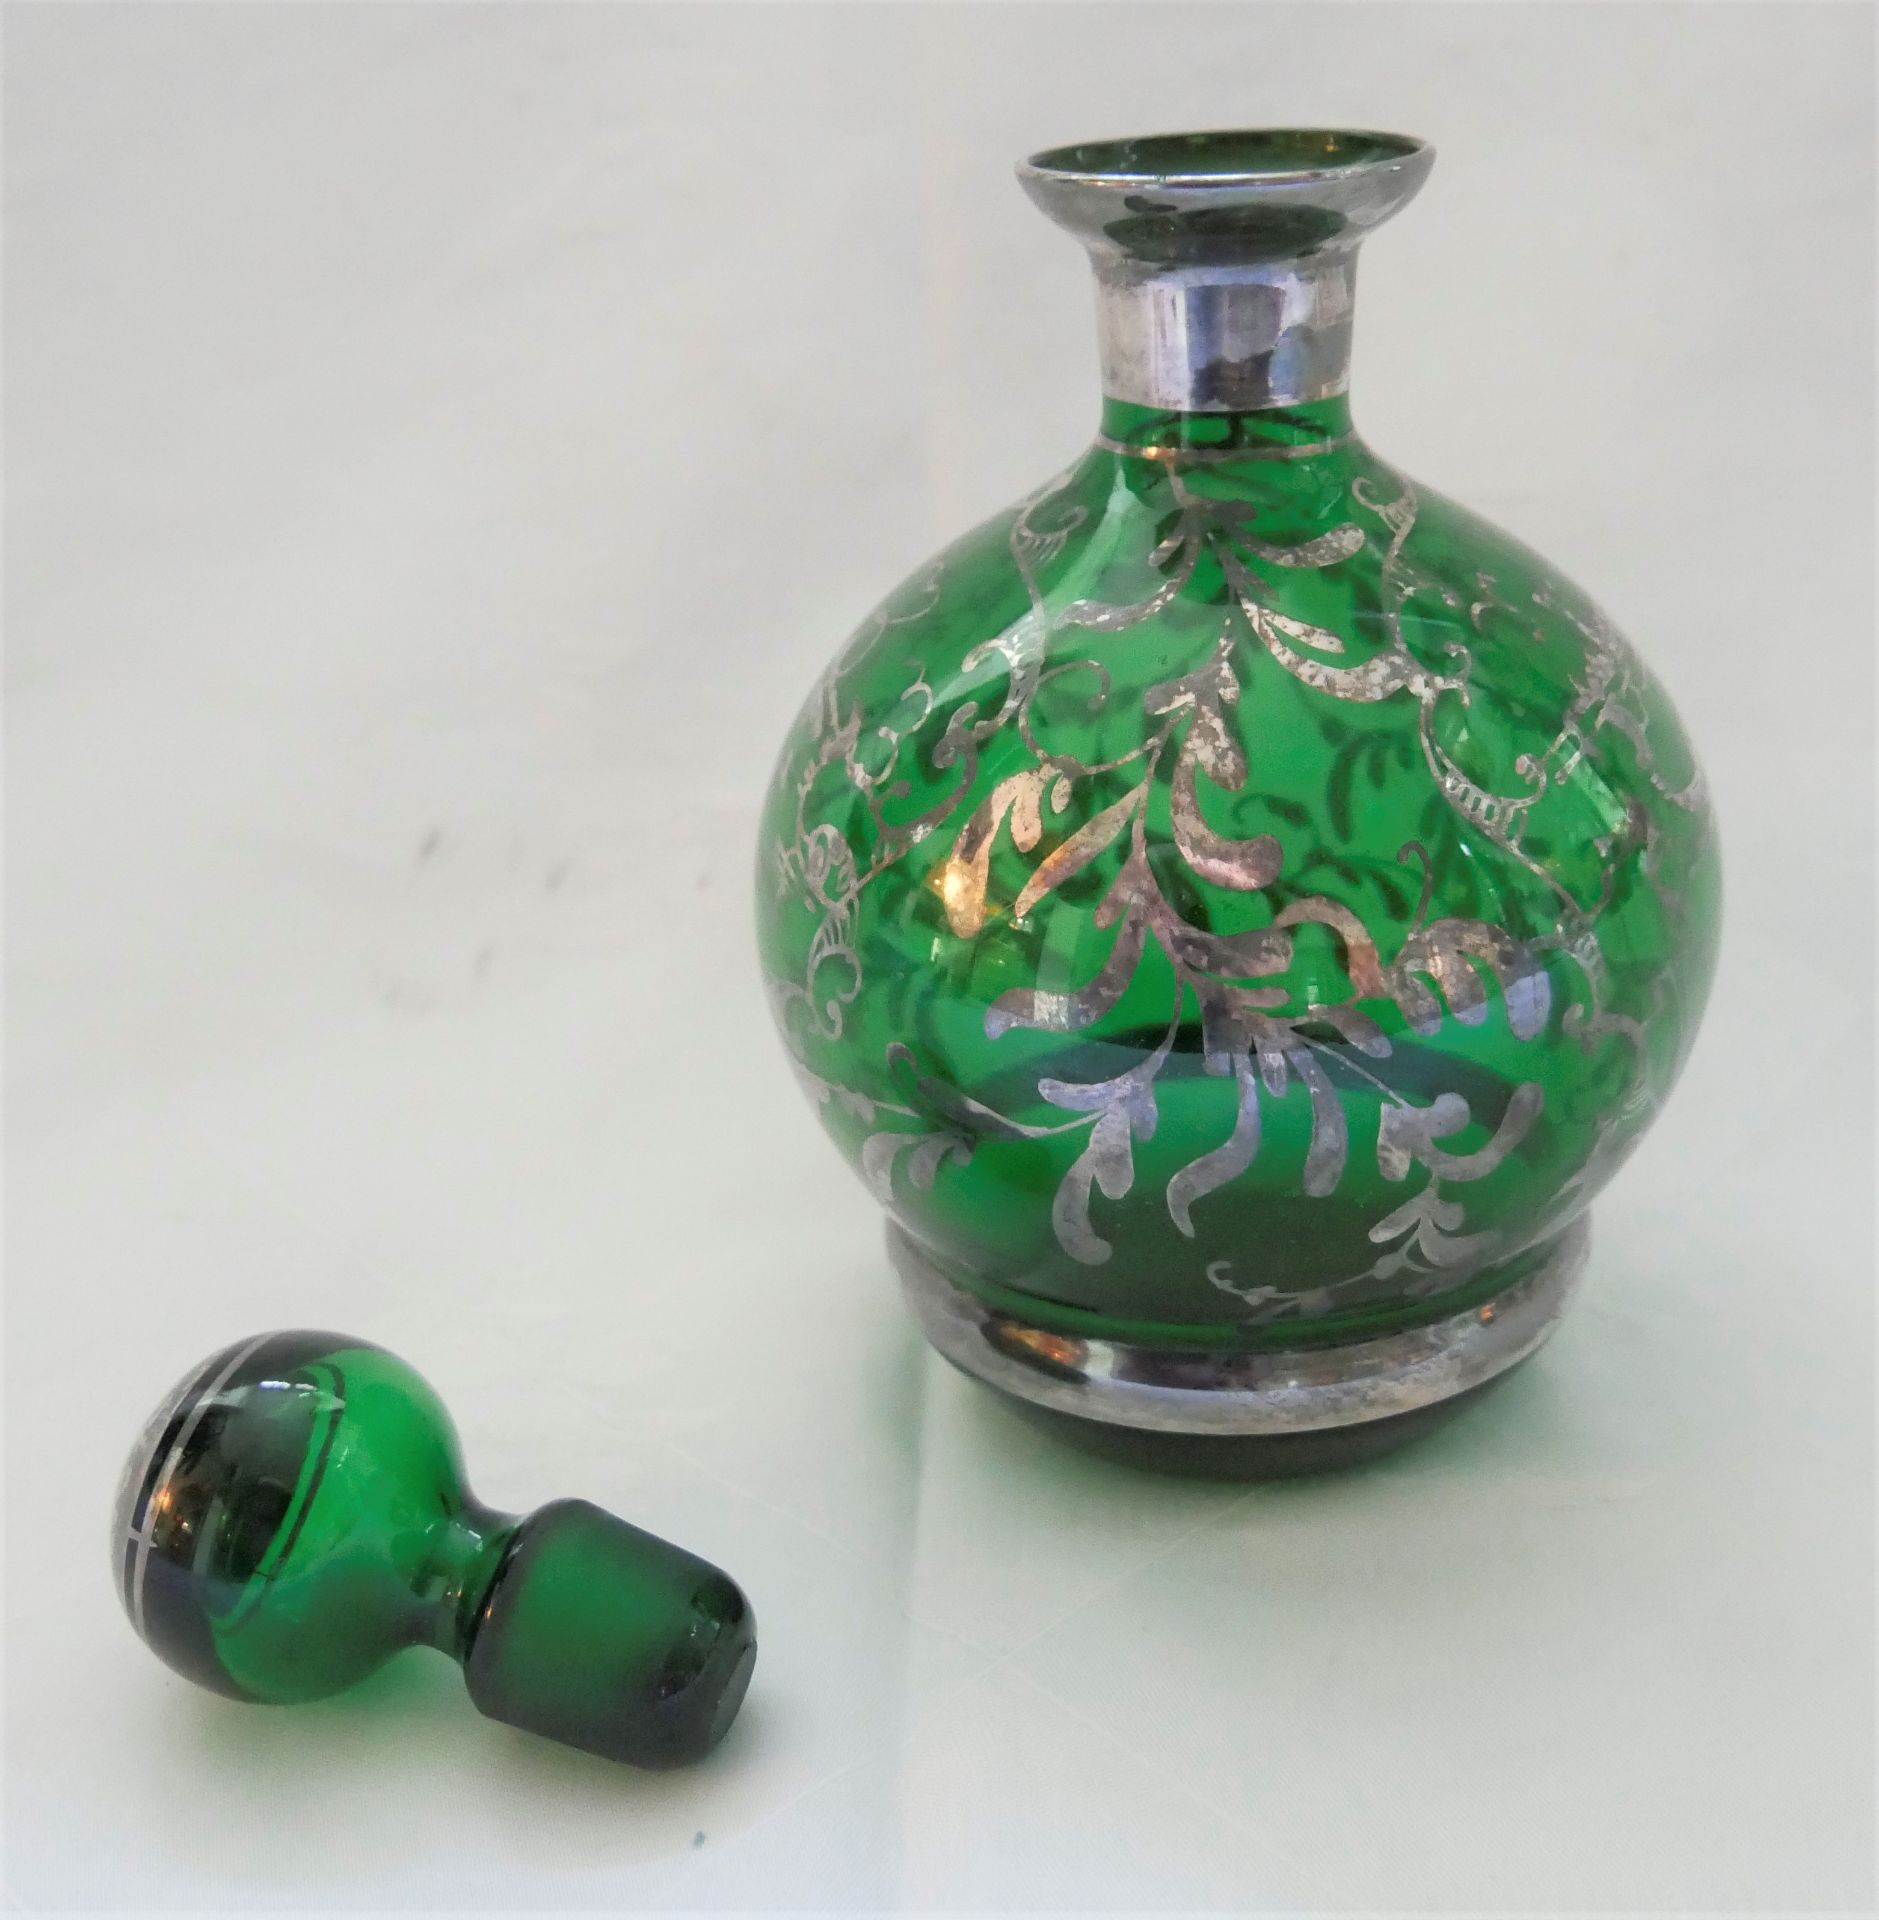 grüne Stöpselflasche mit silberner Bemalung. Höhe ca. 20 cm. Minimaler Chip am Rand oben. - Image 2 of 2